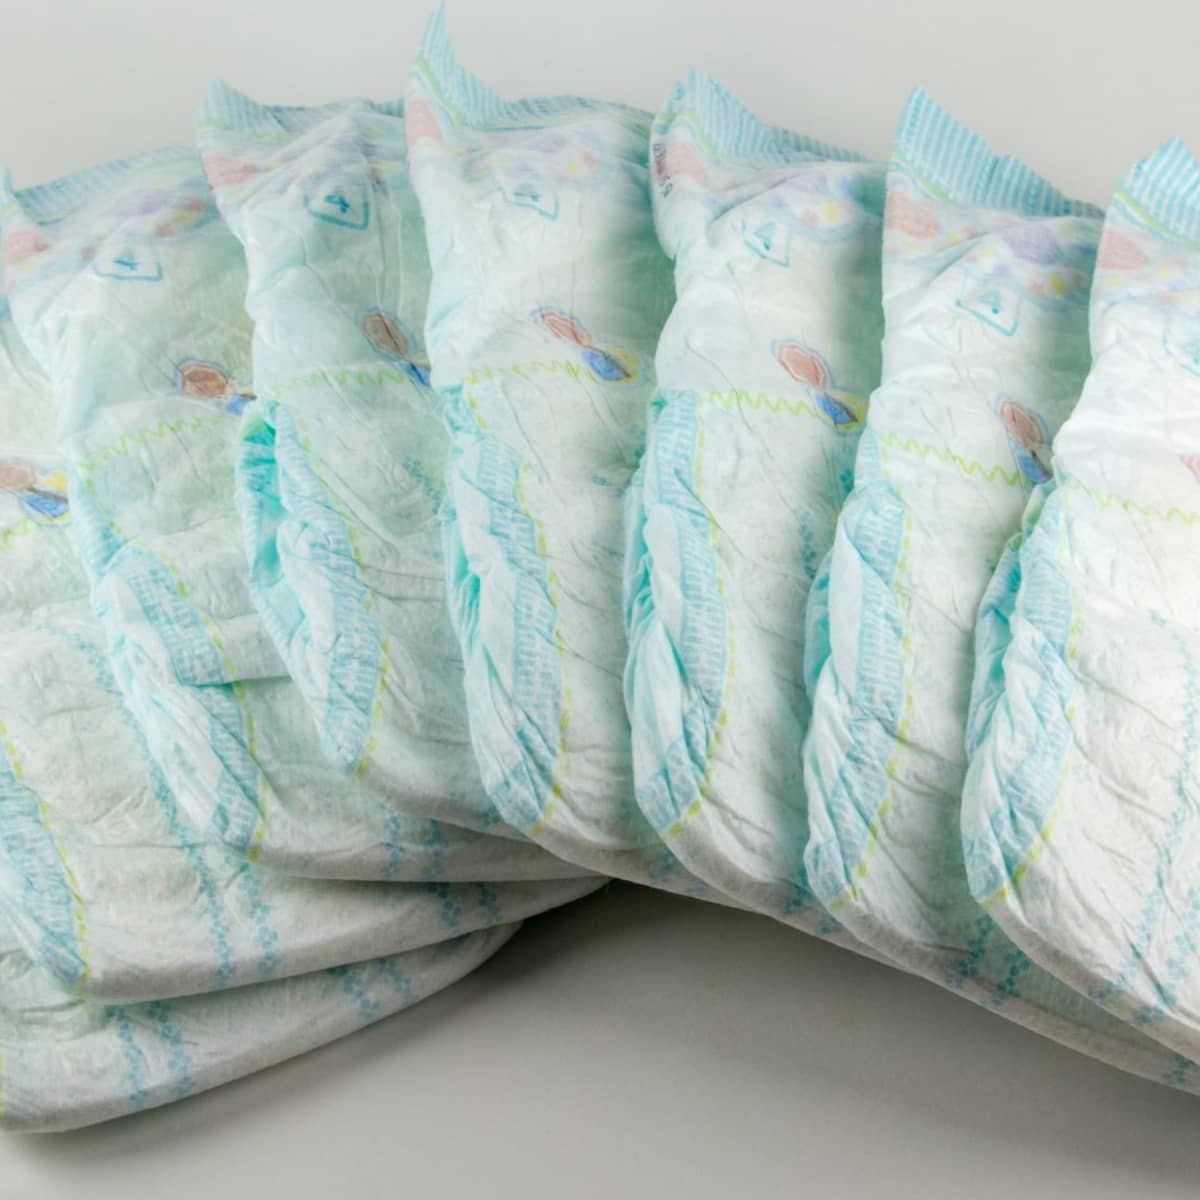 6 Pro Tips to Avoid Overnight Adult Diaper Leaks